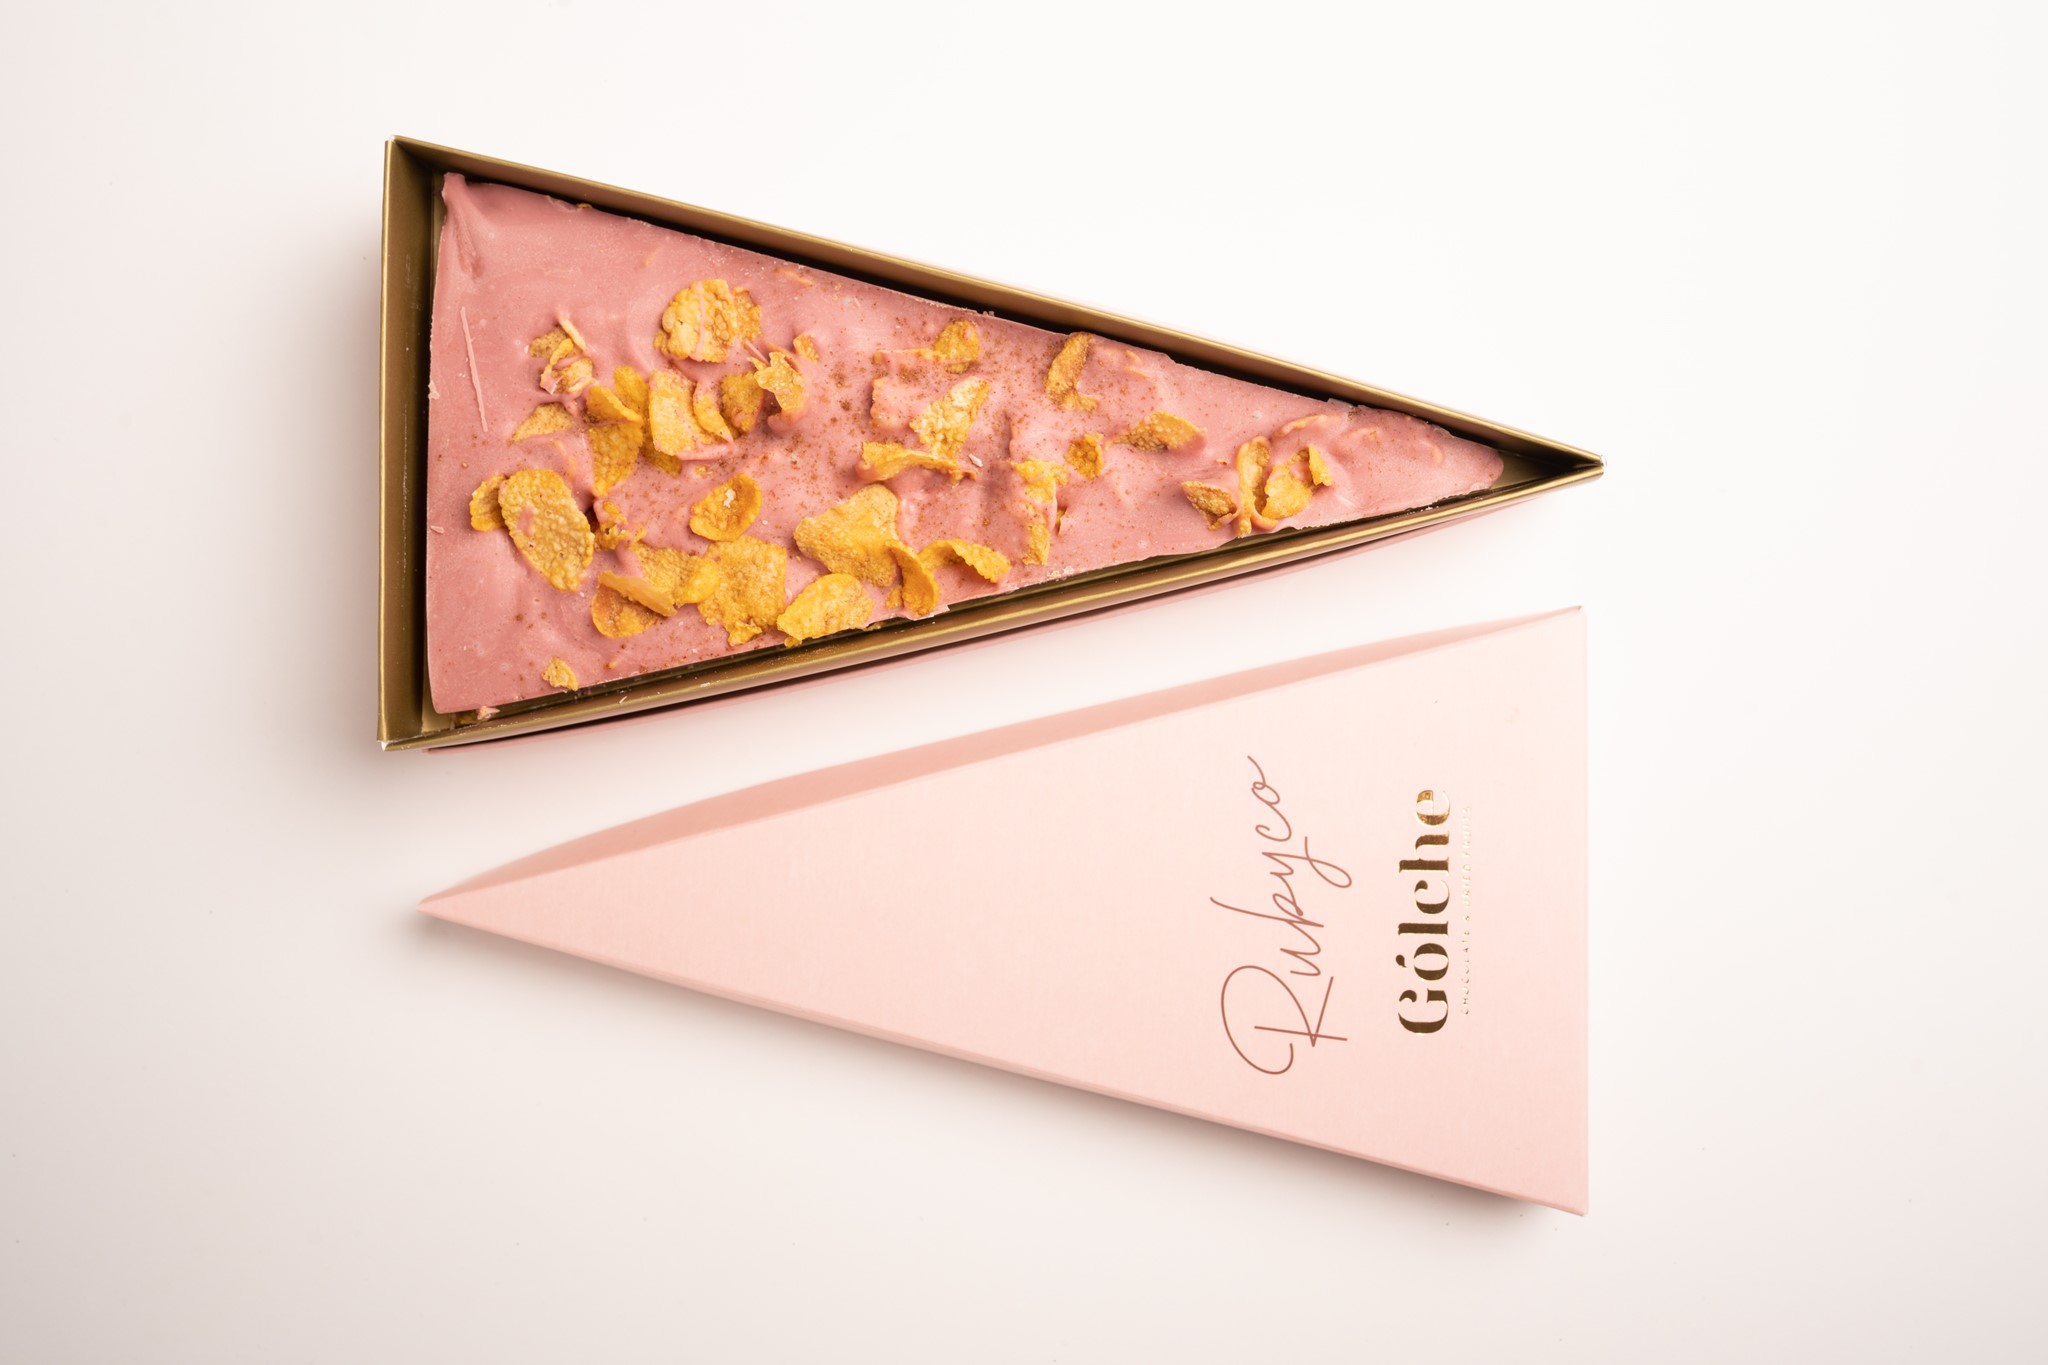 Golche Chocolate - Rubyca resmi